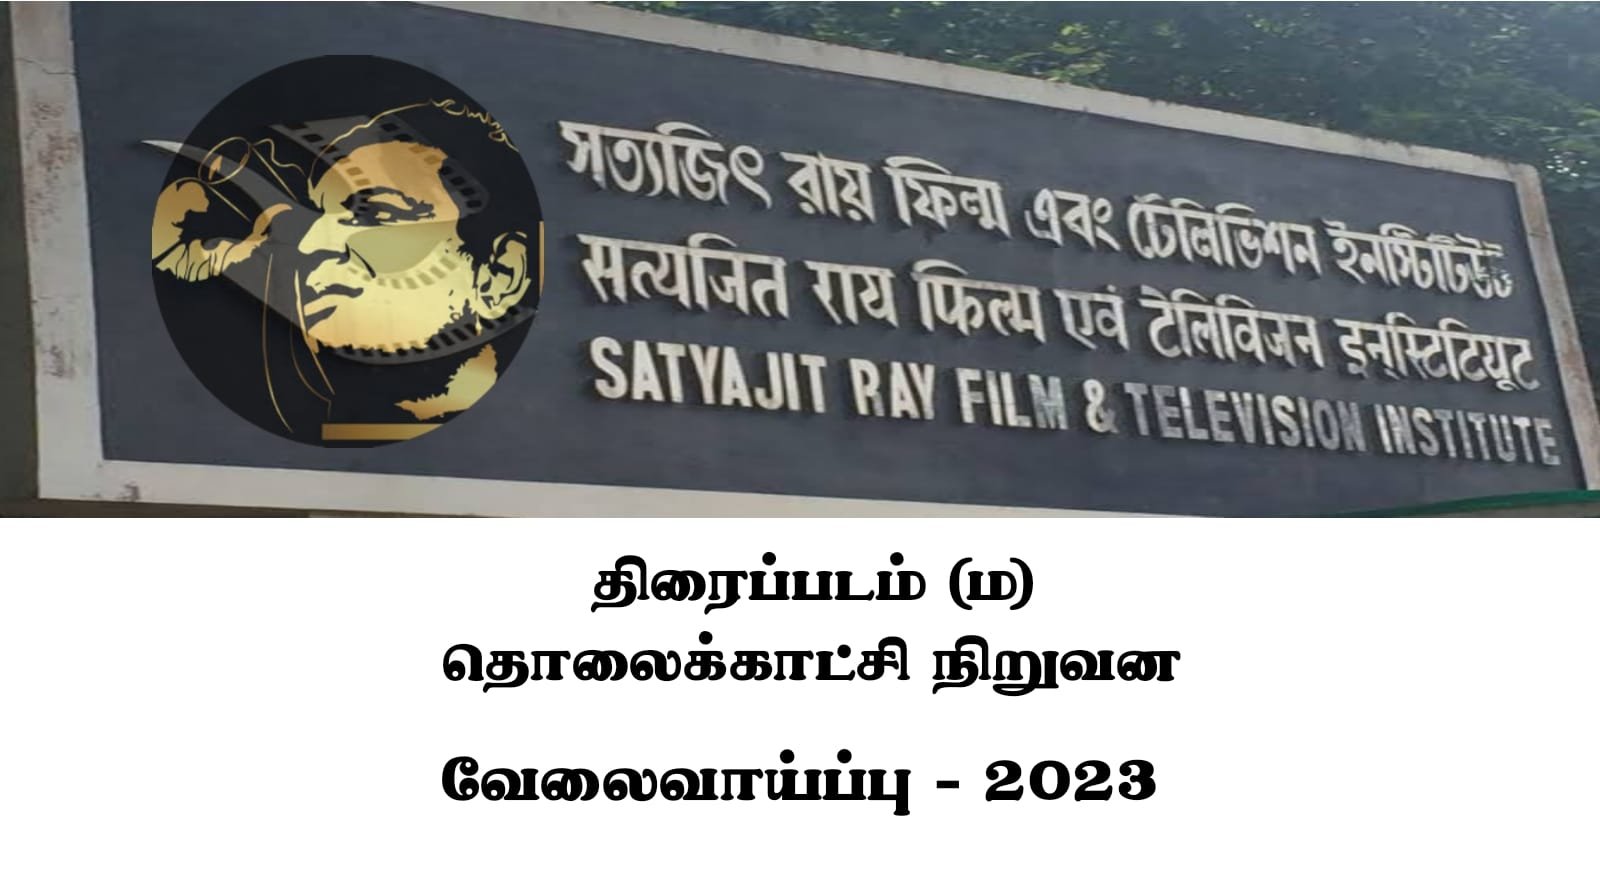 SRFTI- சத்யஜித் திரைப்படம் மற்றும் தொலைக்காட்சி நிறுவன வேலைவாய்ப்பு 2023